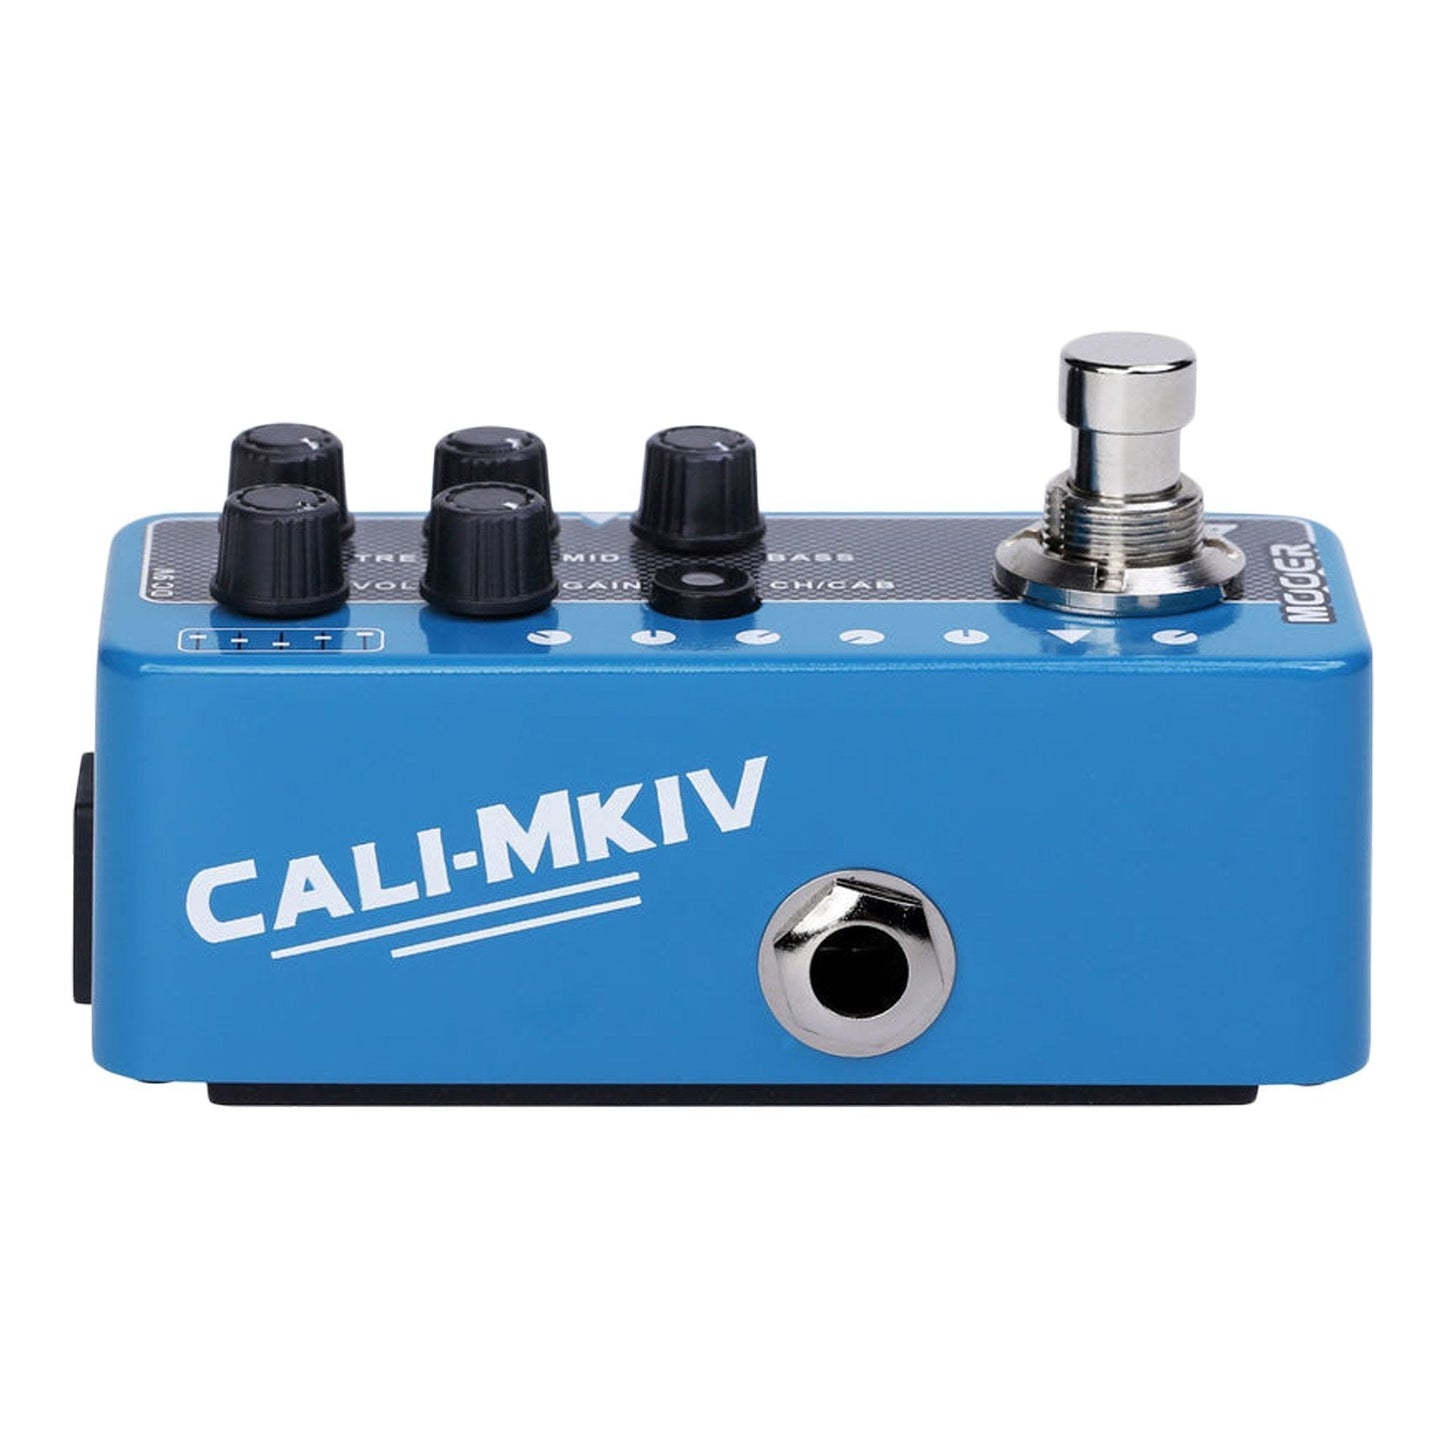 Mooer 'Cali-MKIV 017' Digital Micro Preamp Guitar Effects Pedal